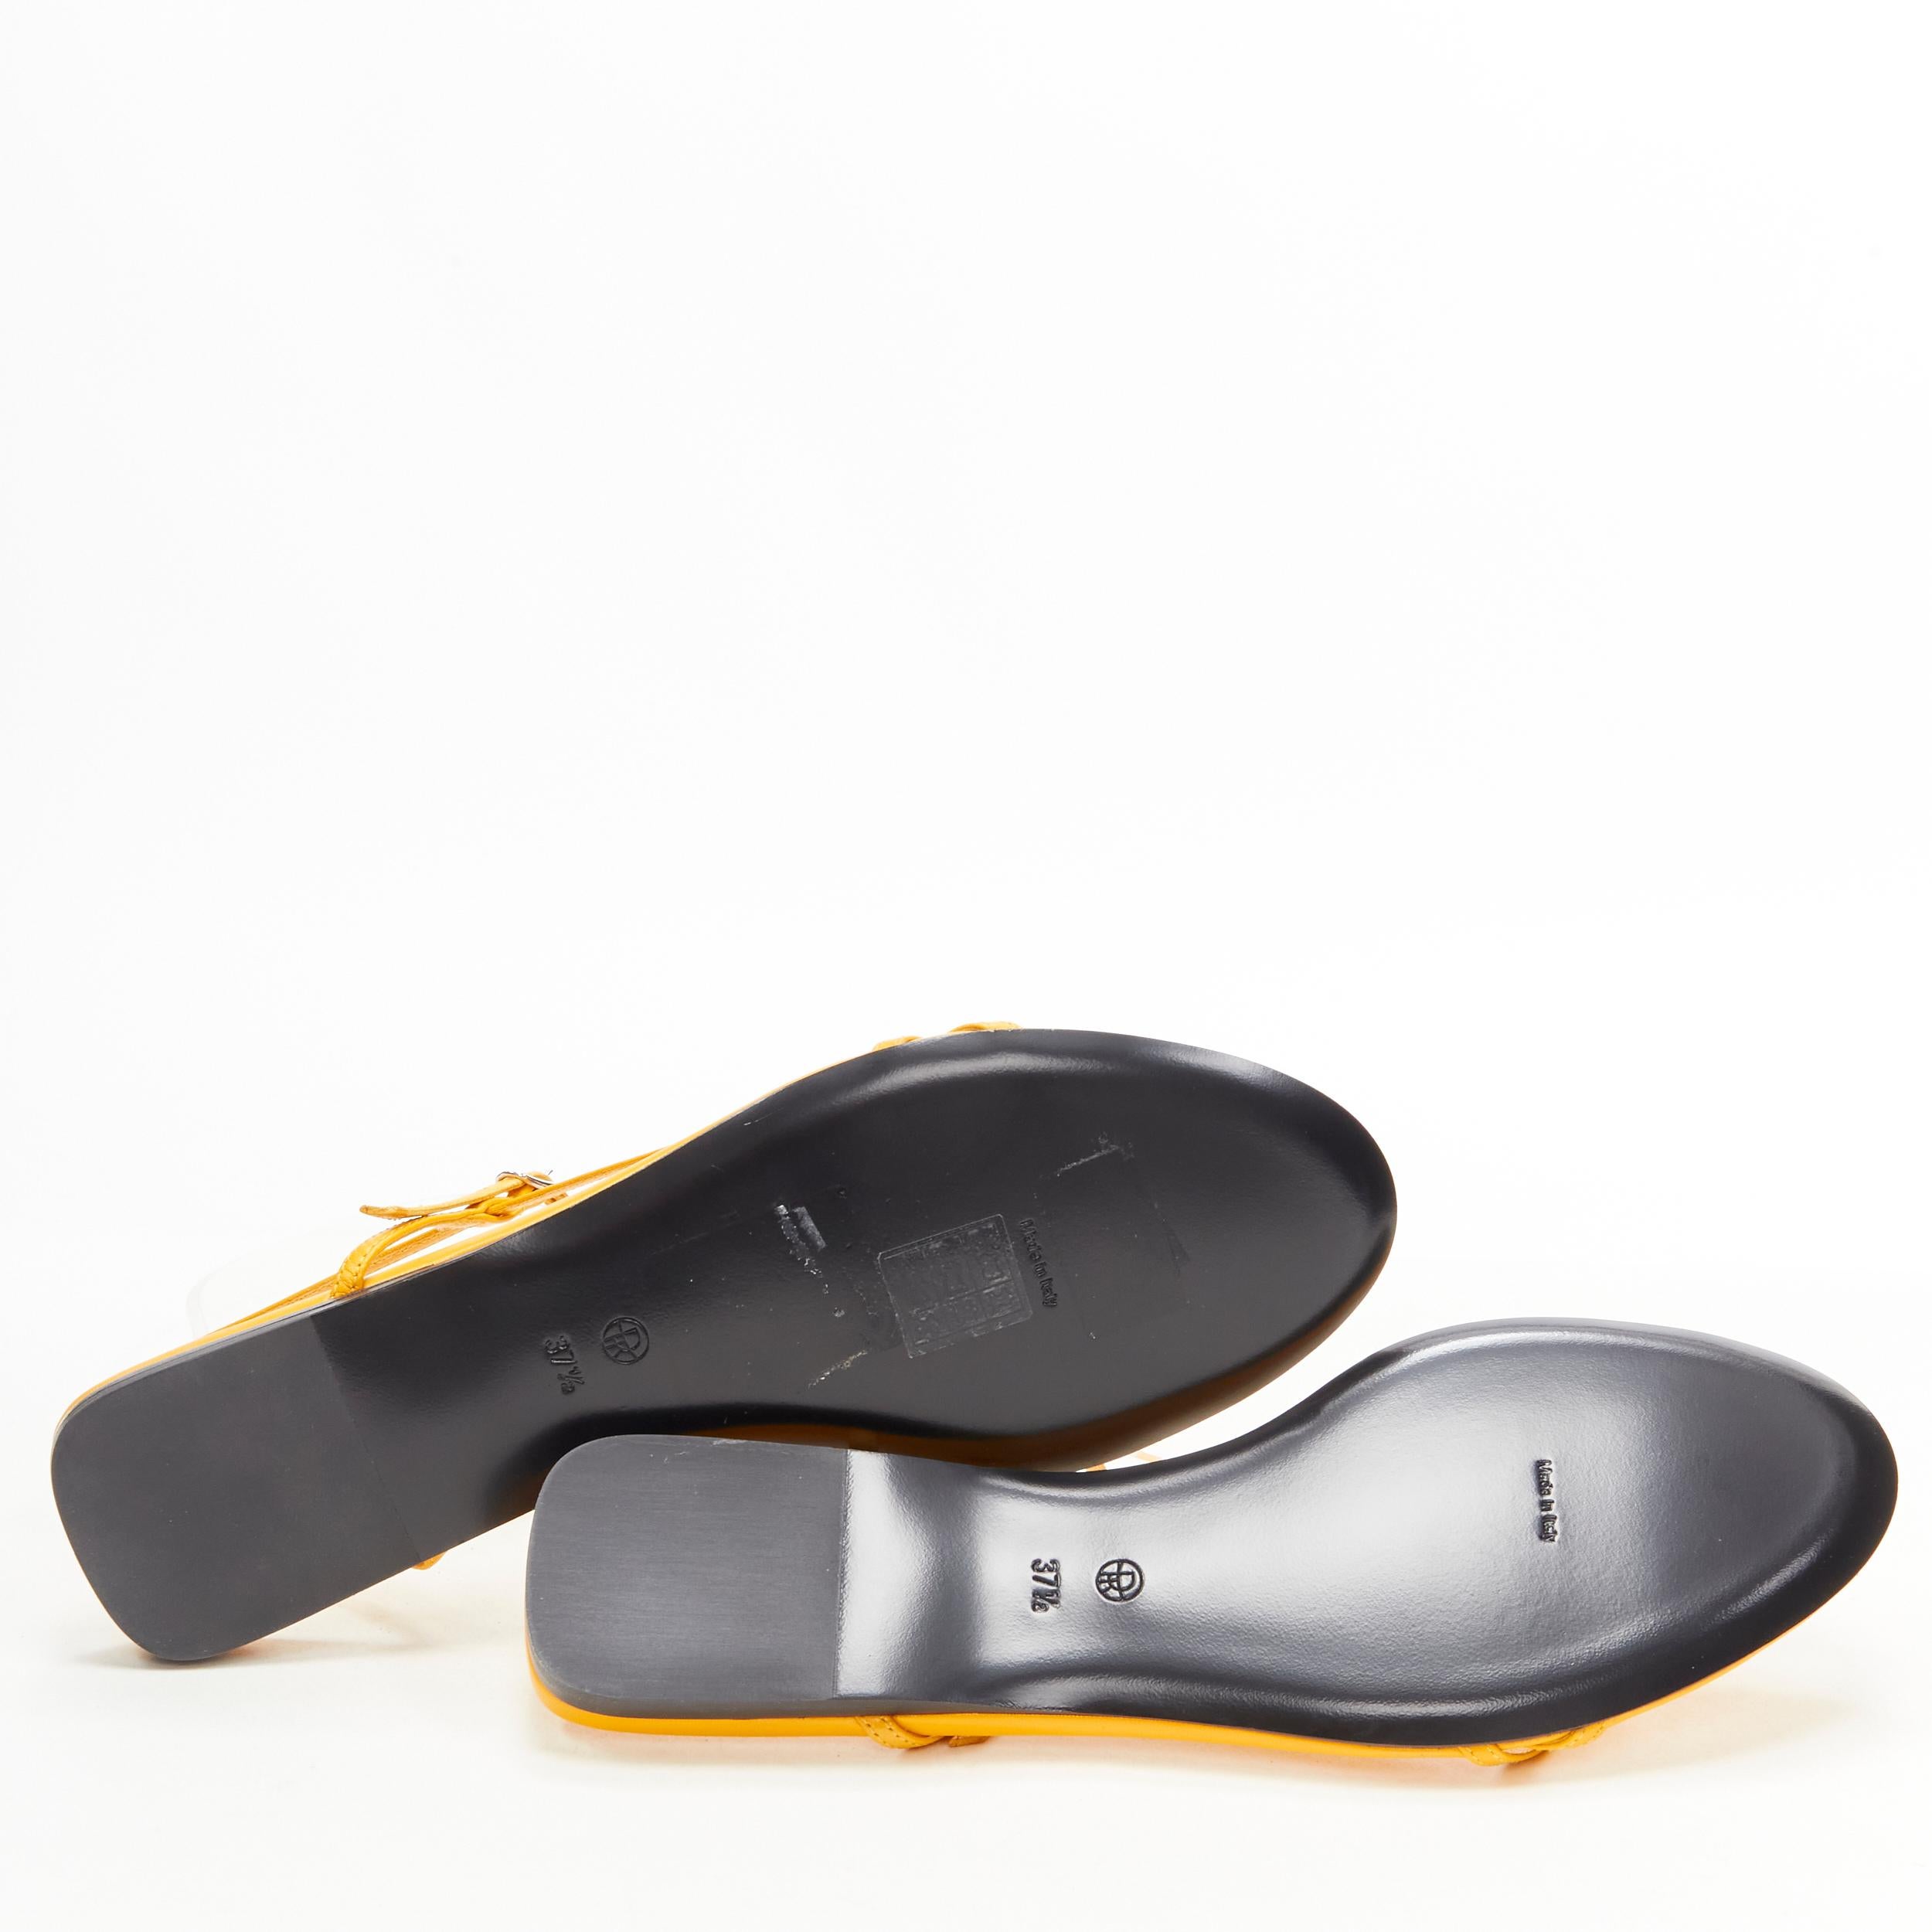 new THE ROW Bare Flat Sandal  mustard yellow kid leather minimal slides EU37.5 4